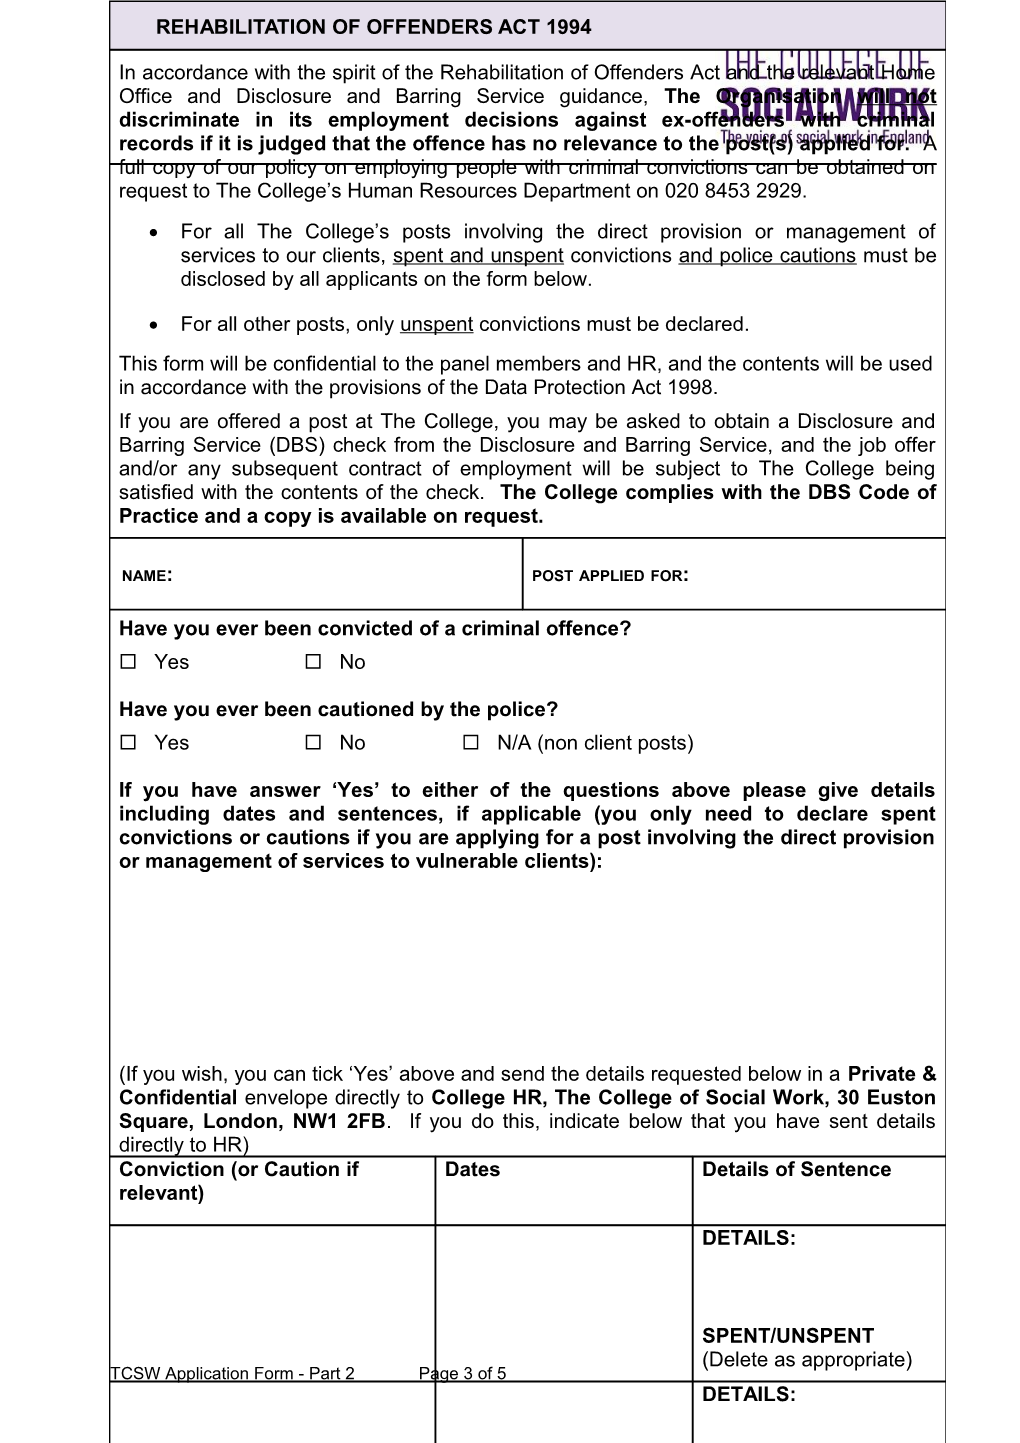 TCSW Application Form Part 2